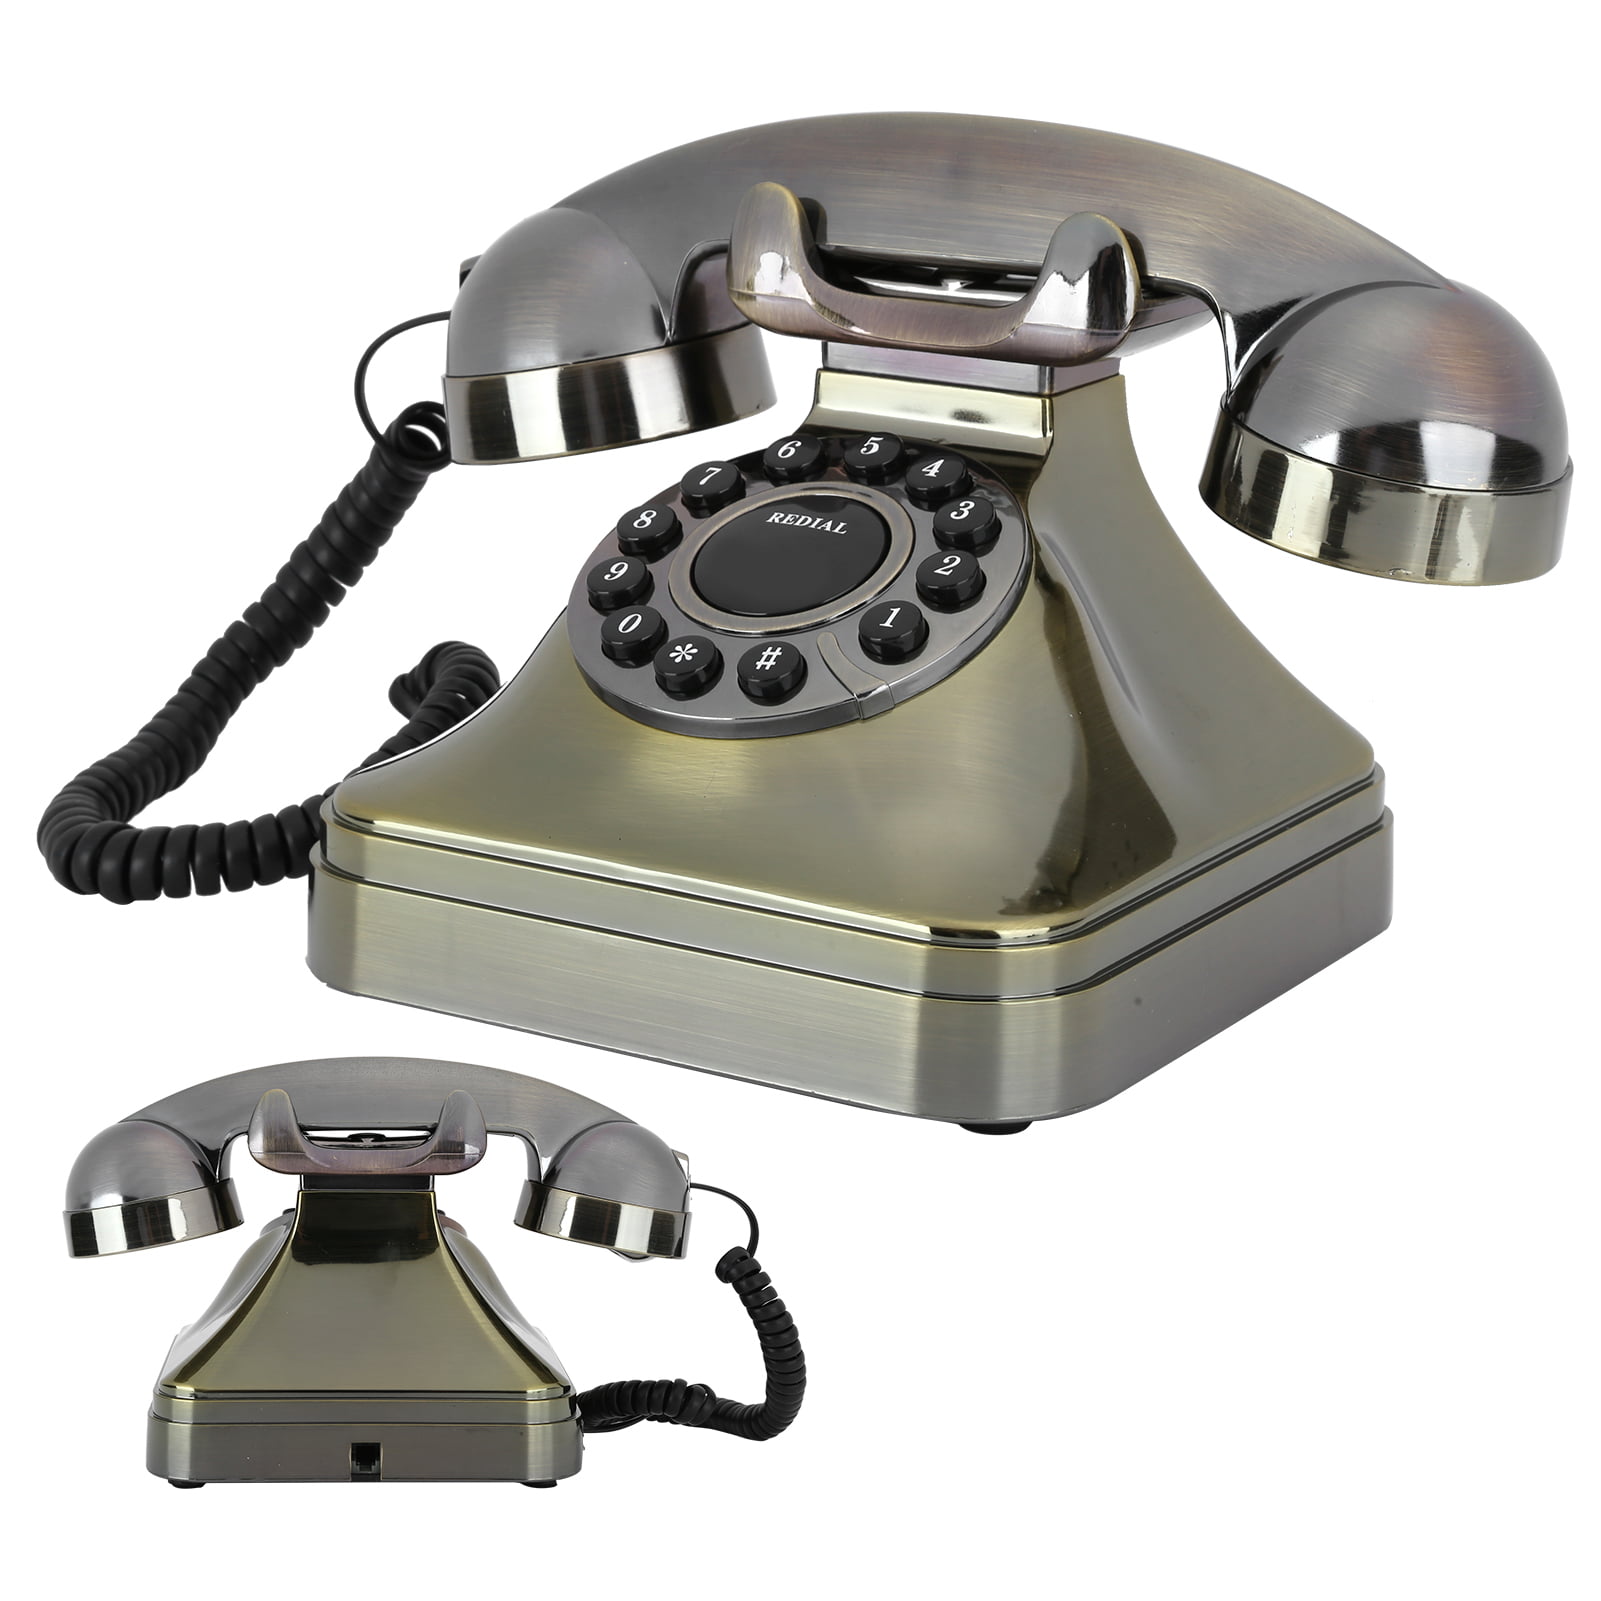 british landline old phone ringtone